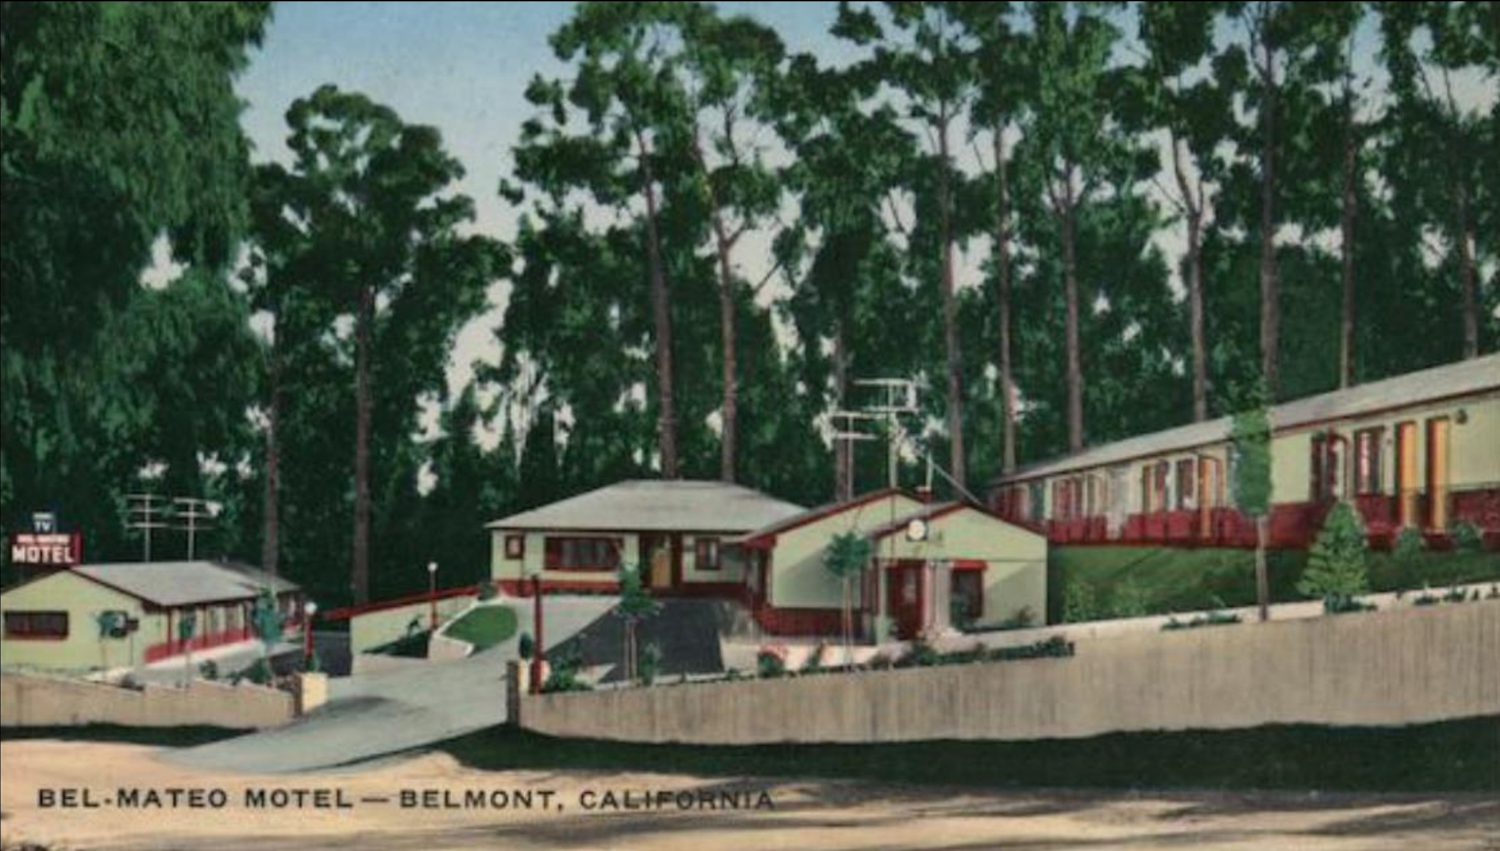 Postcard image of the Bel-Mateo Motel, image via EIR circa 1955